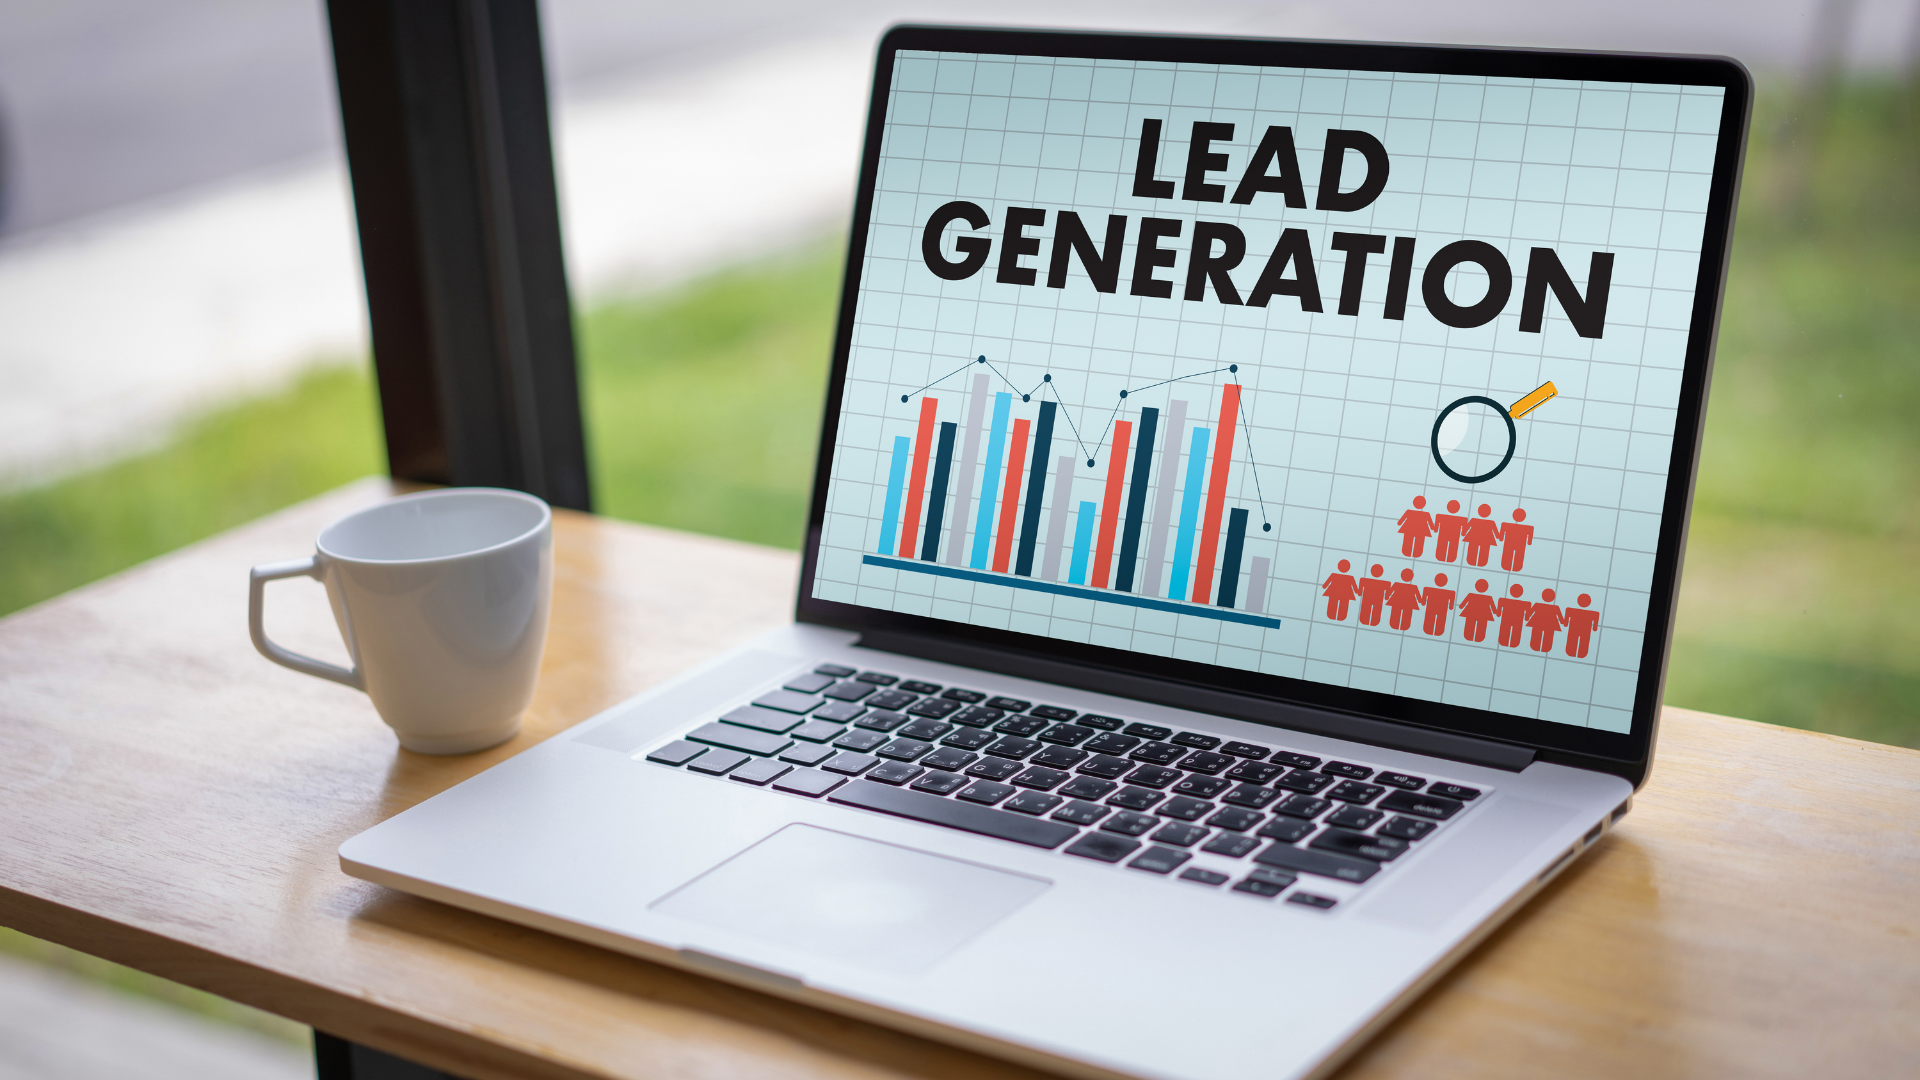 Lead Generation Best Practices